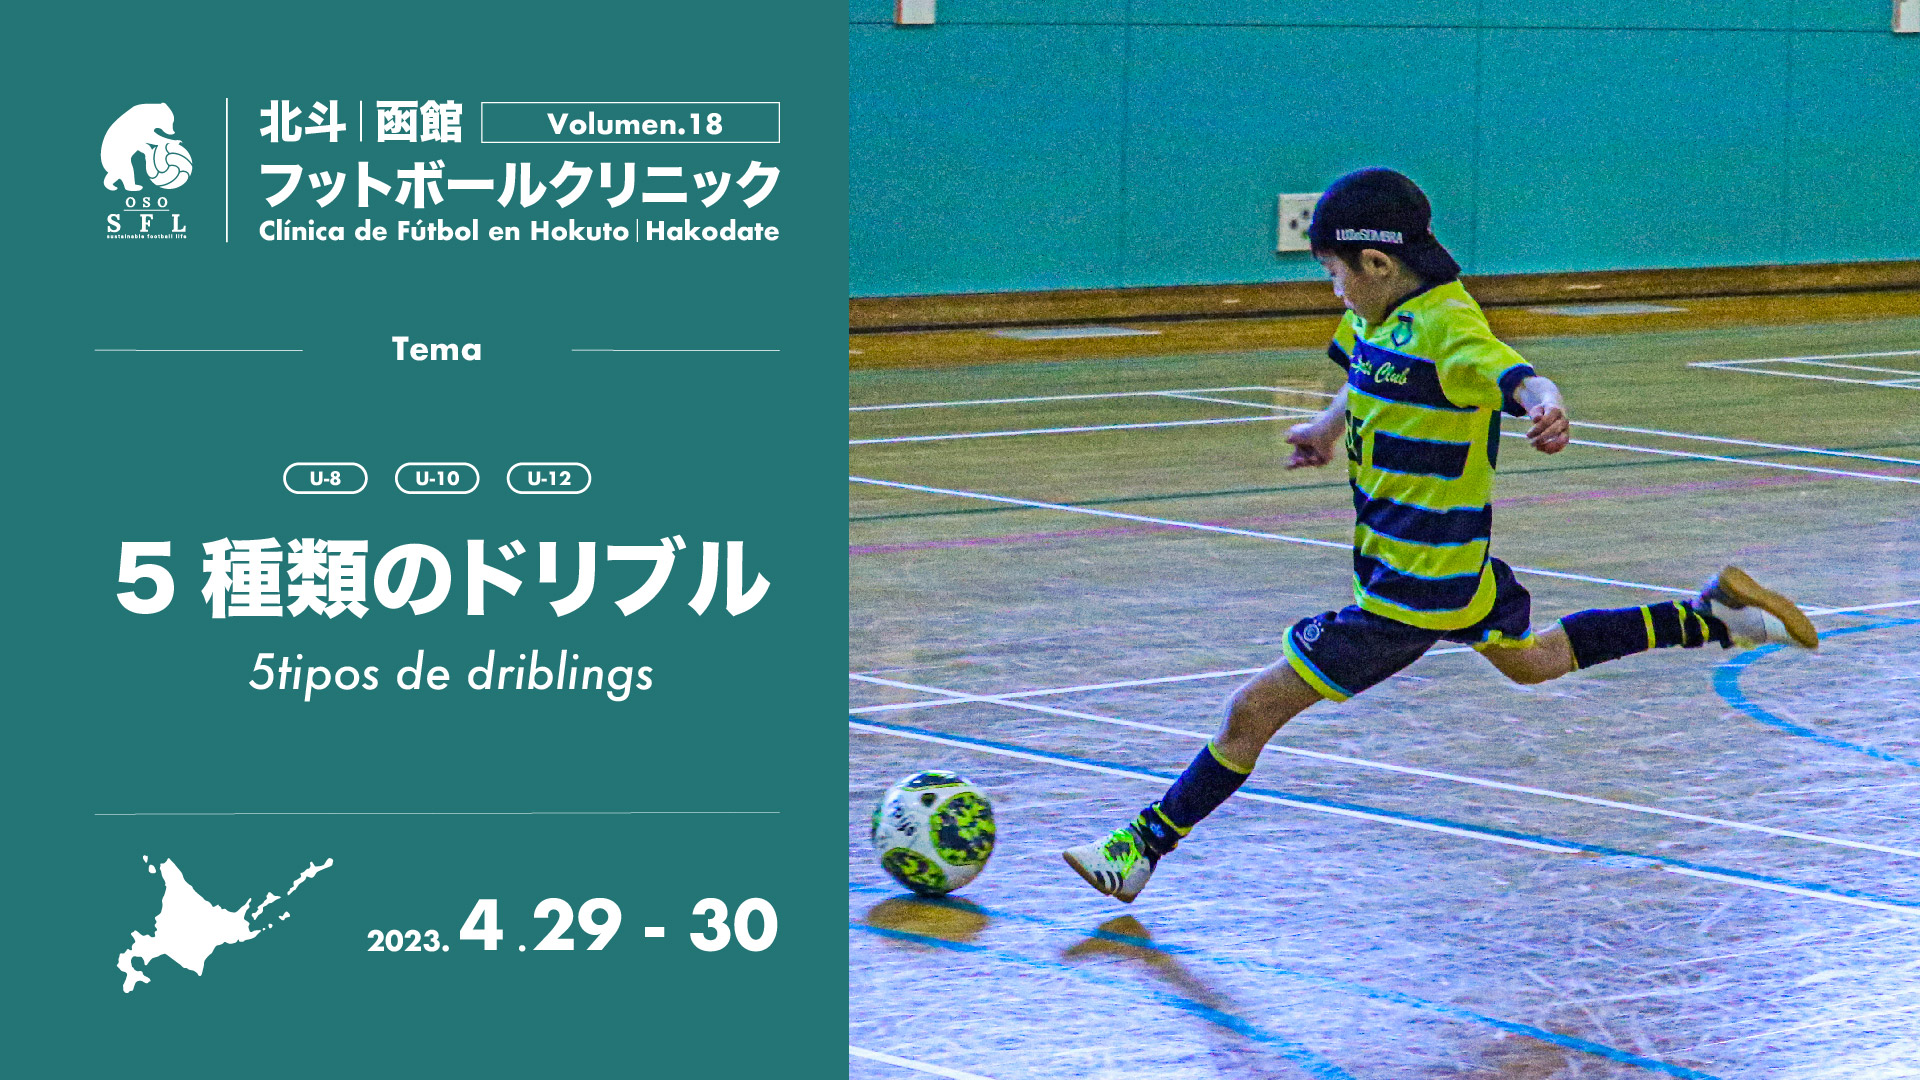 20230411_notice-hokuto-hakodate-football-clinic-2023-vol18